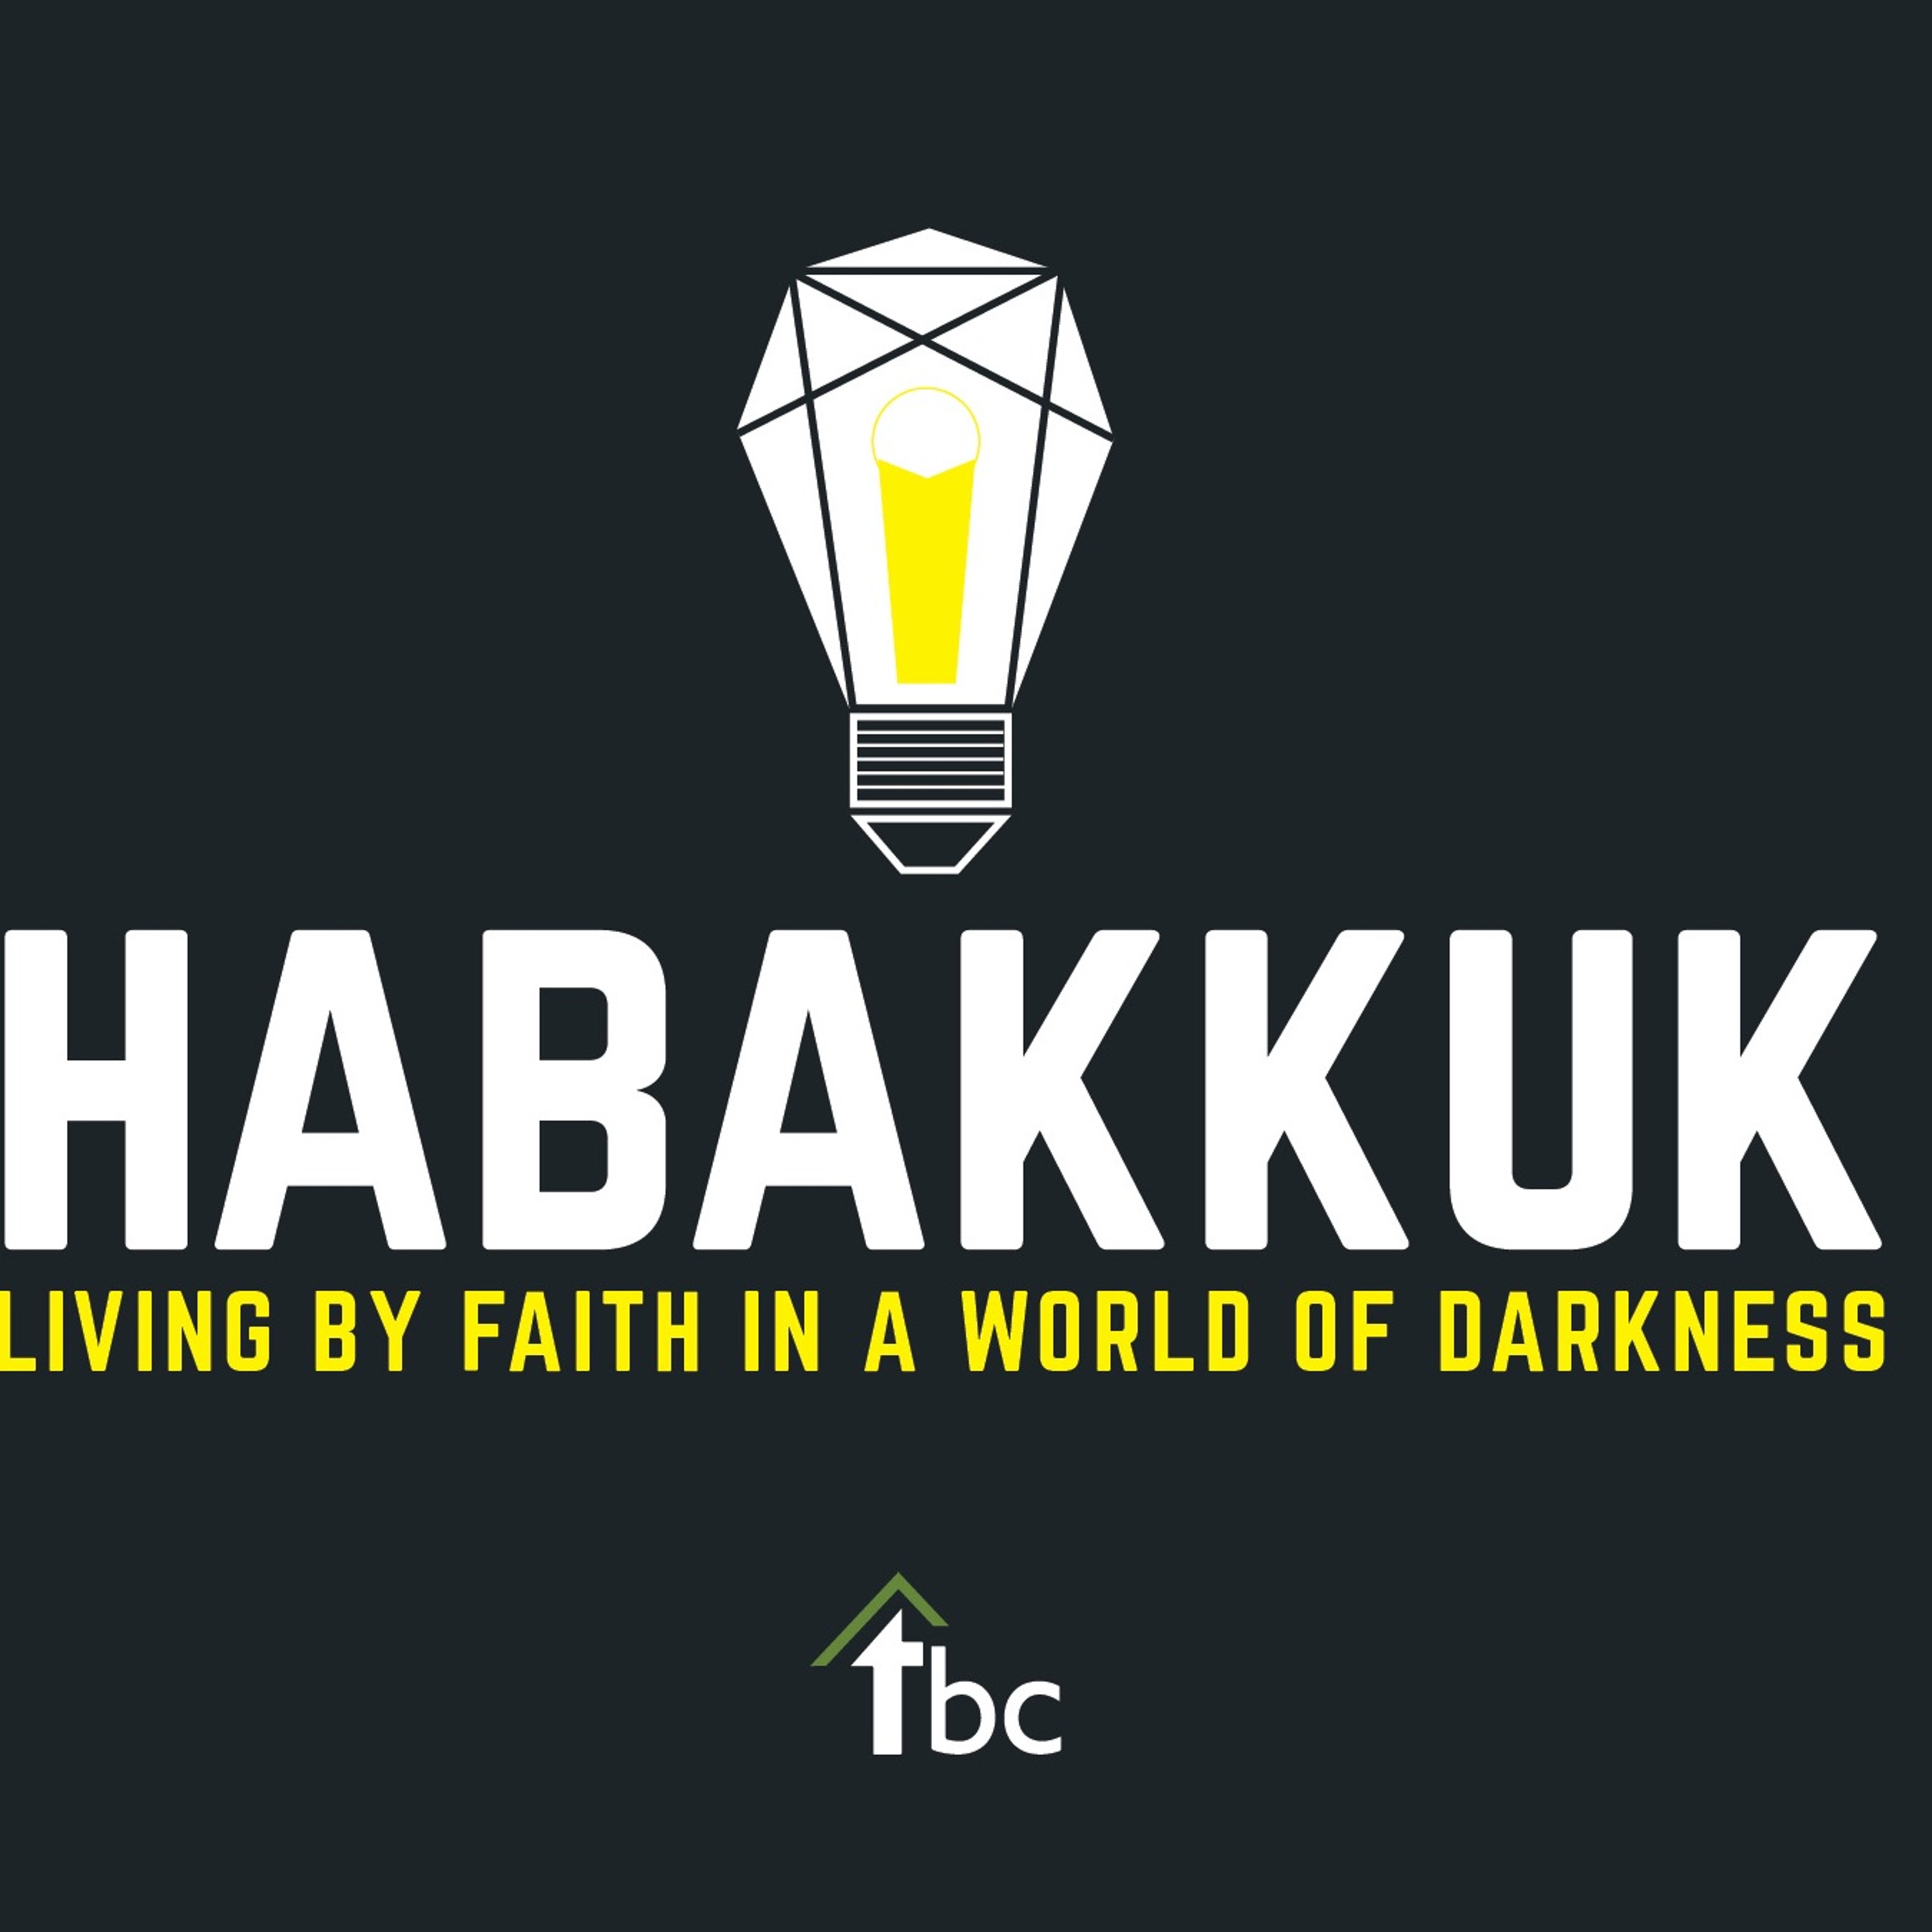 Remember The Cross (Habakkuk 3:1-16)